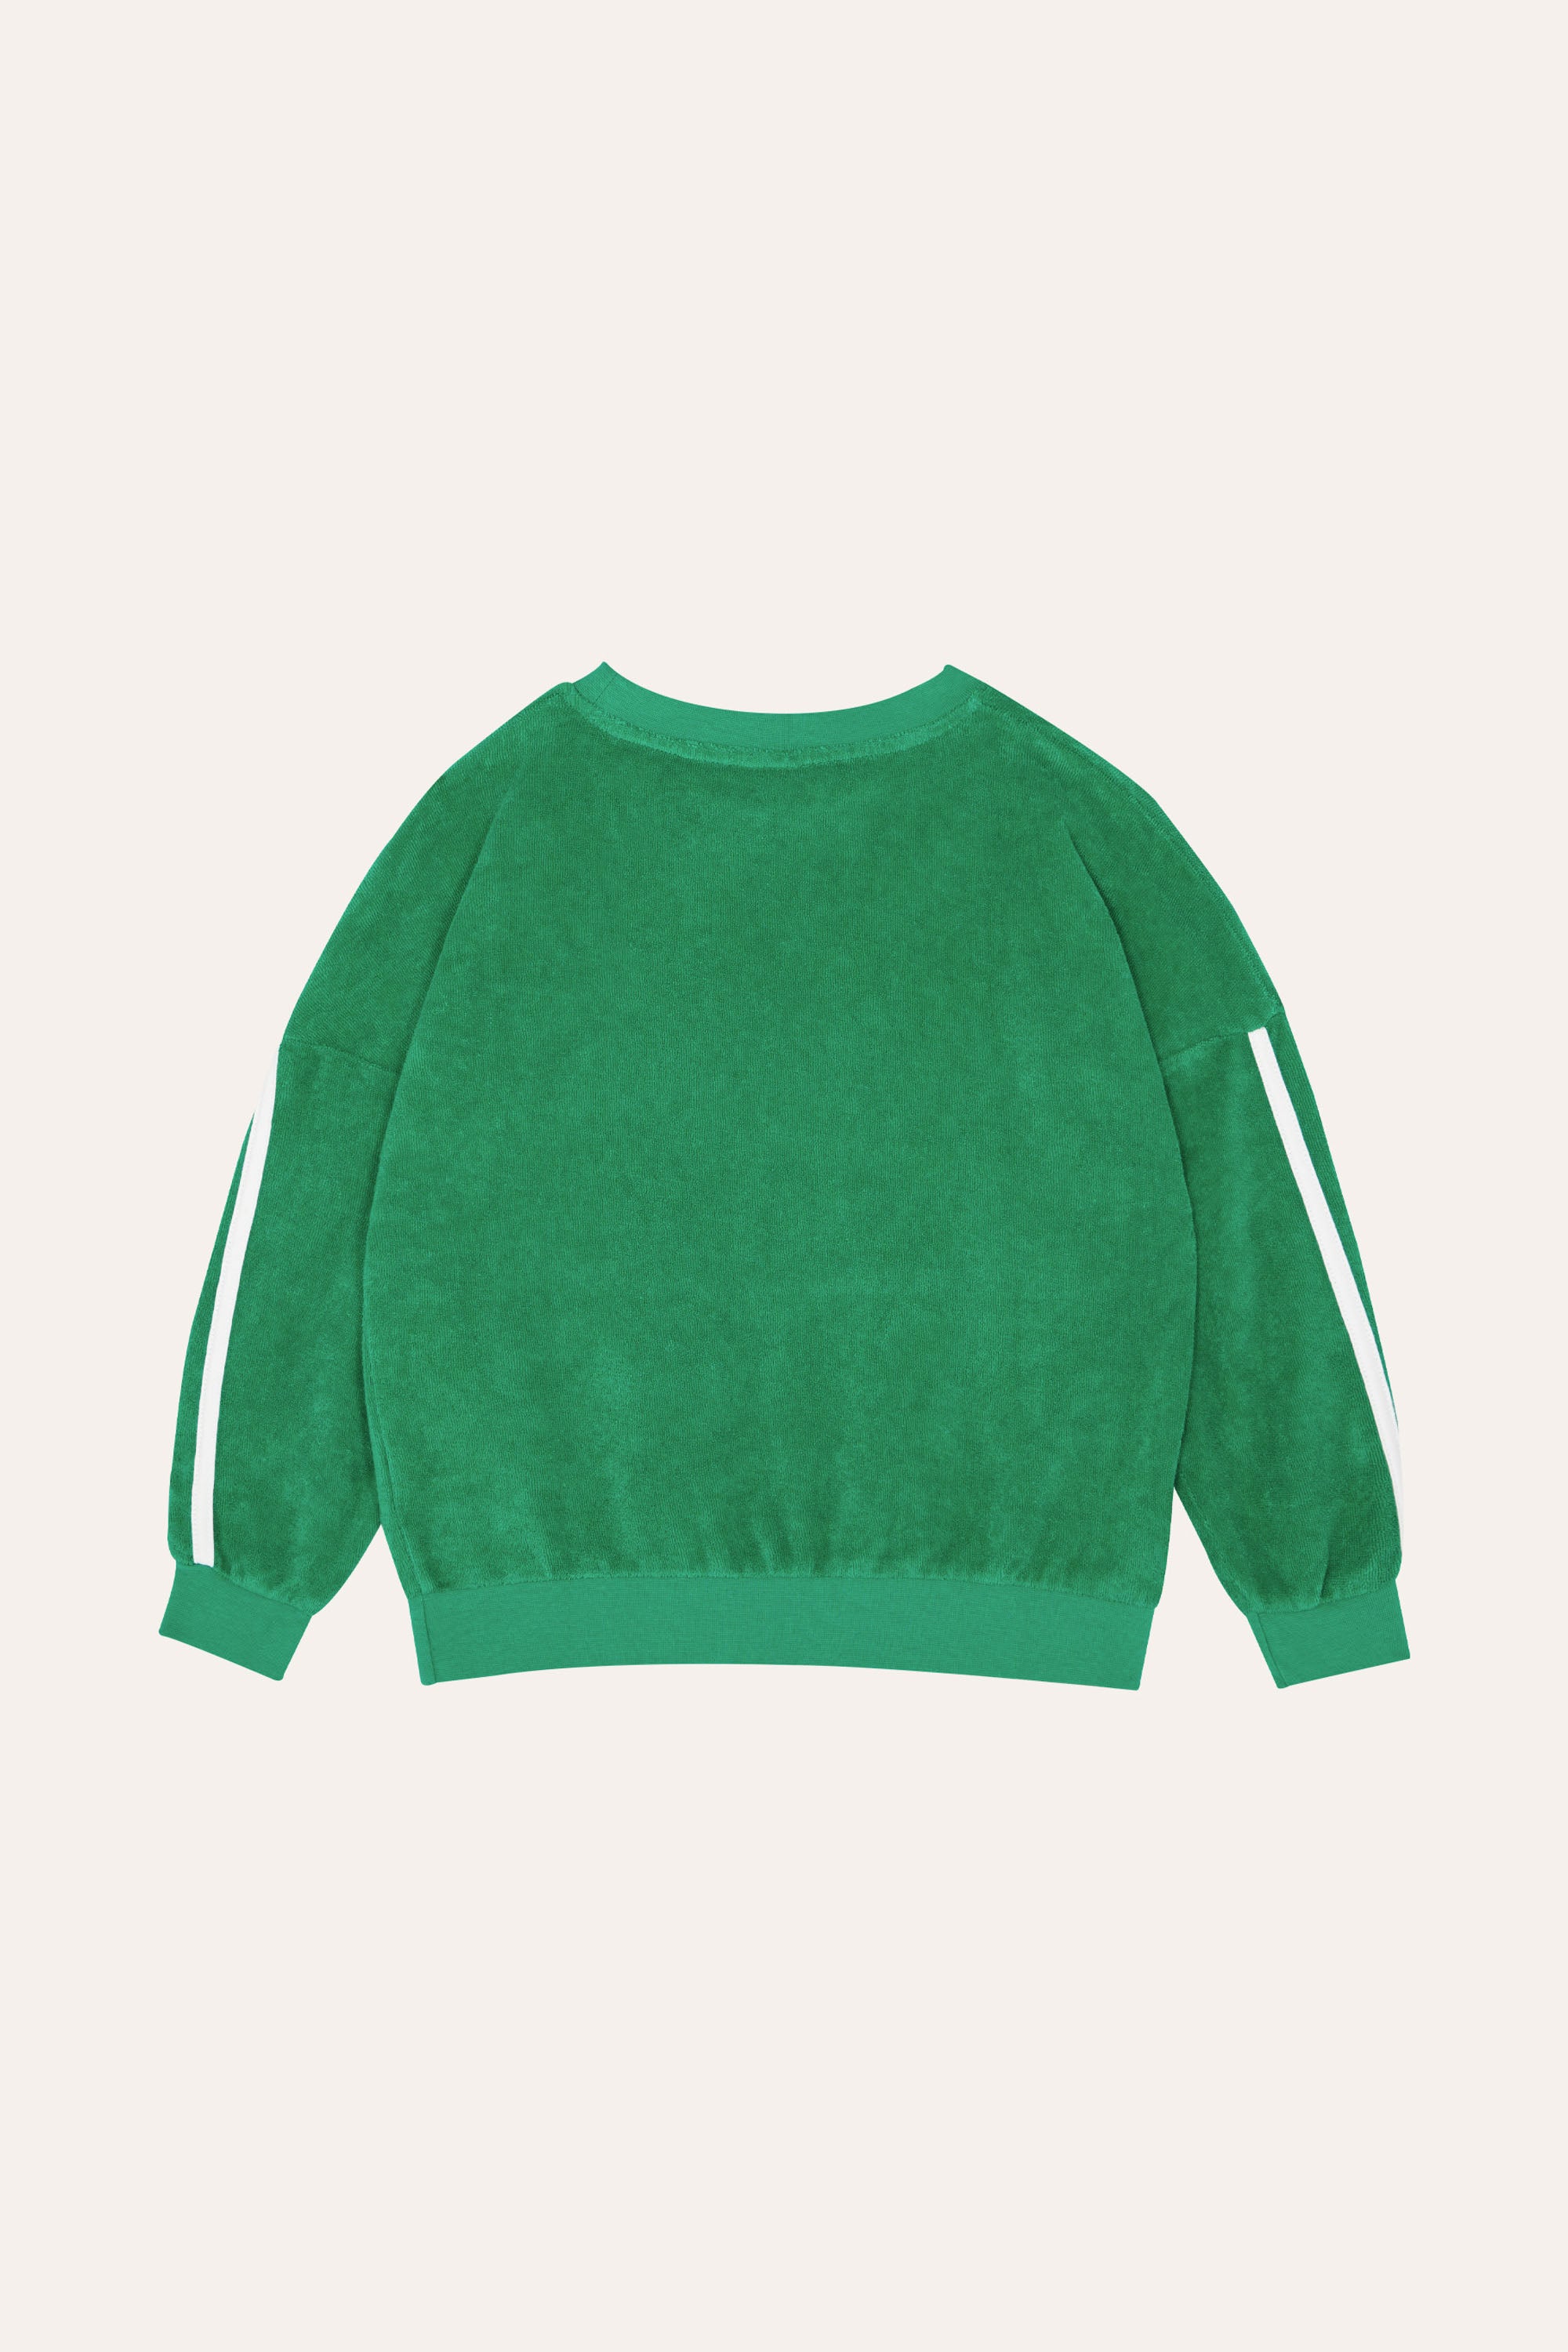 The Campamento - Green sporty oversized kids sweatshirt